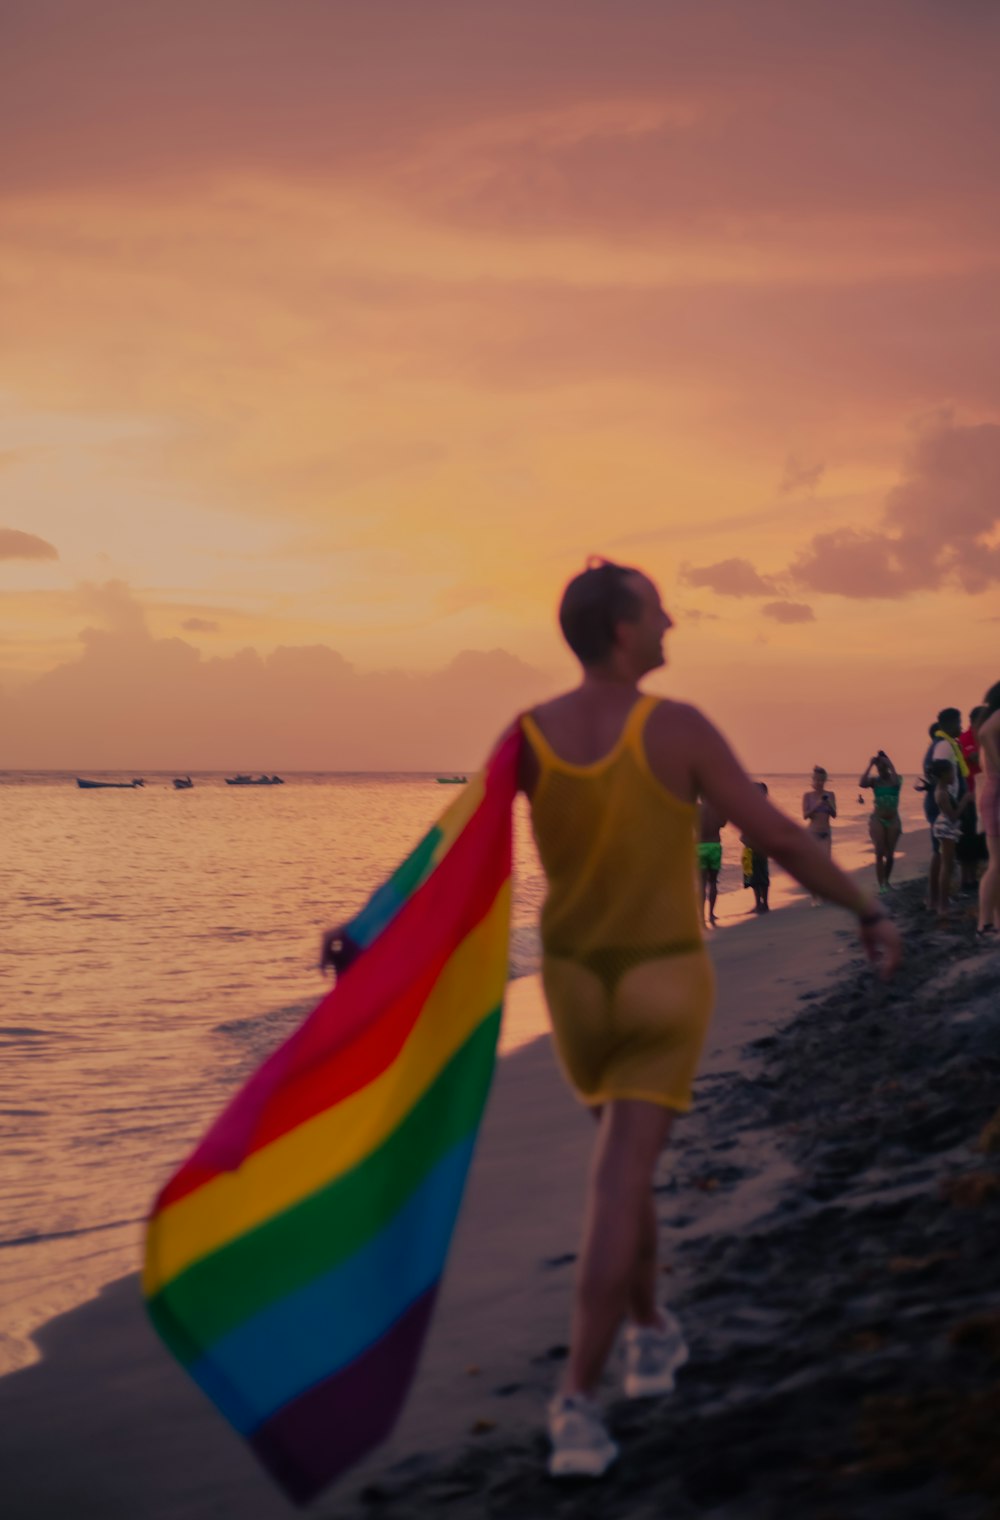 a person walking on a beach holding a rainbow flag